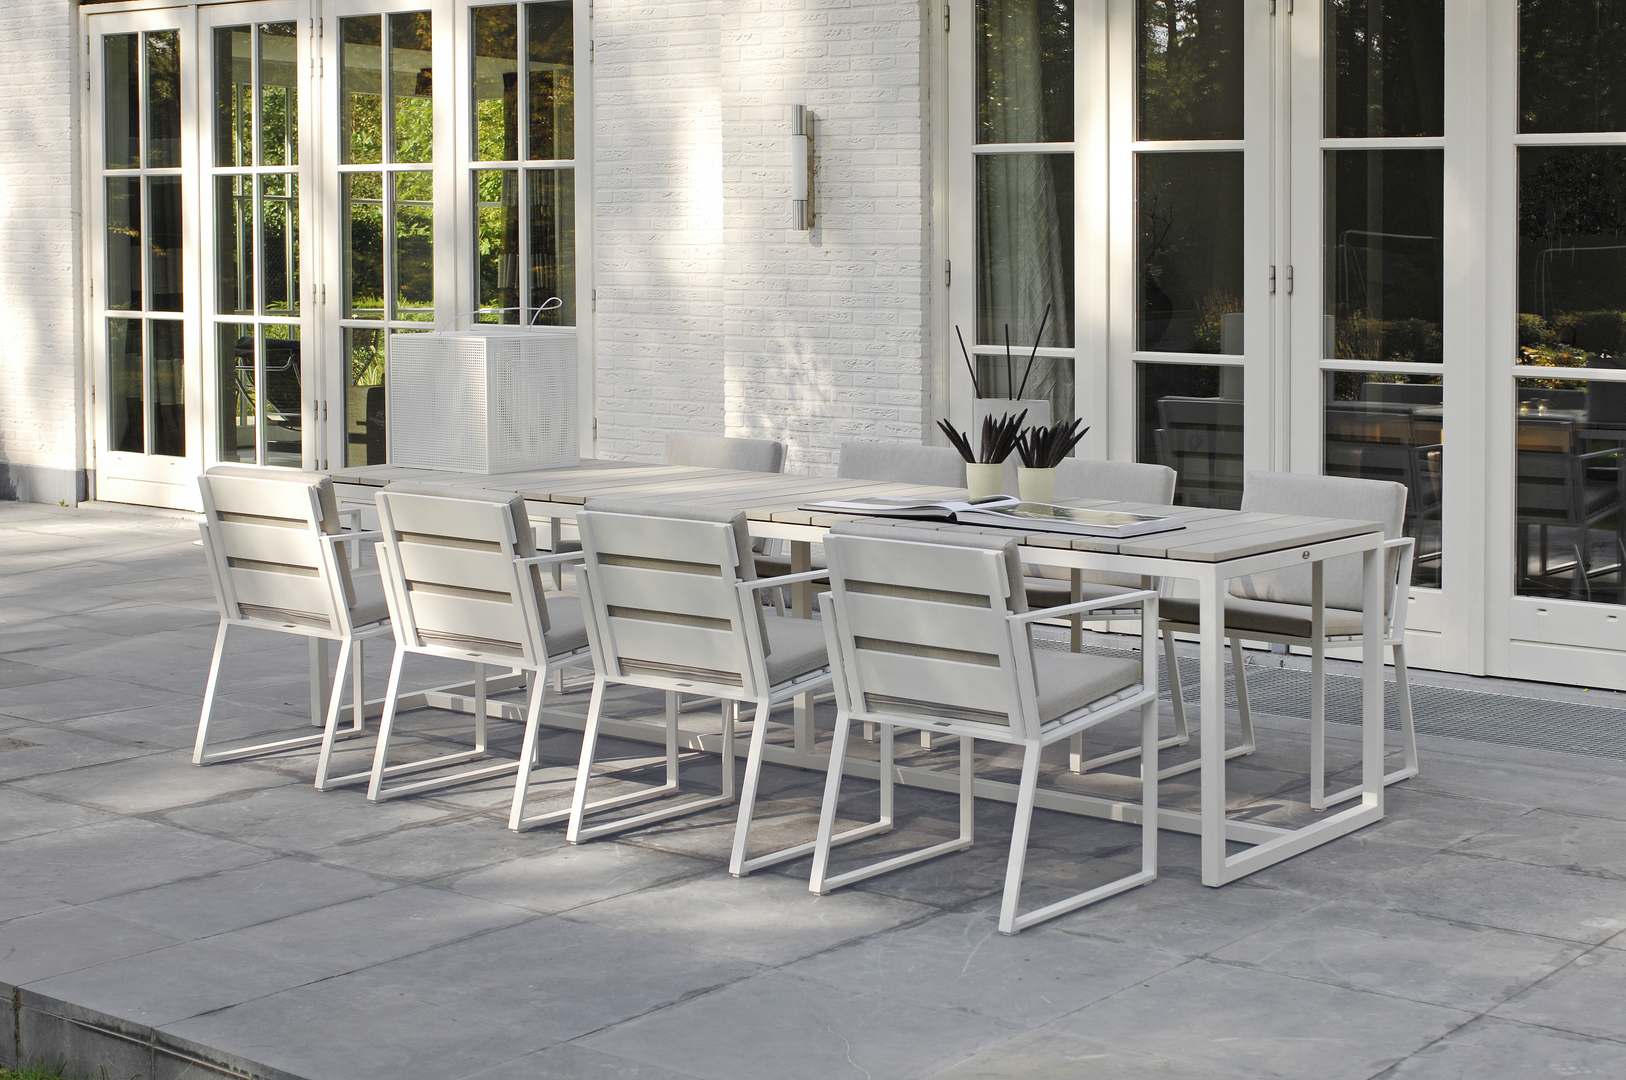 Borek Aluminium Samos chair Venice table-1 (1).jpg